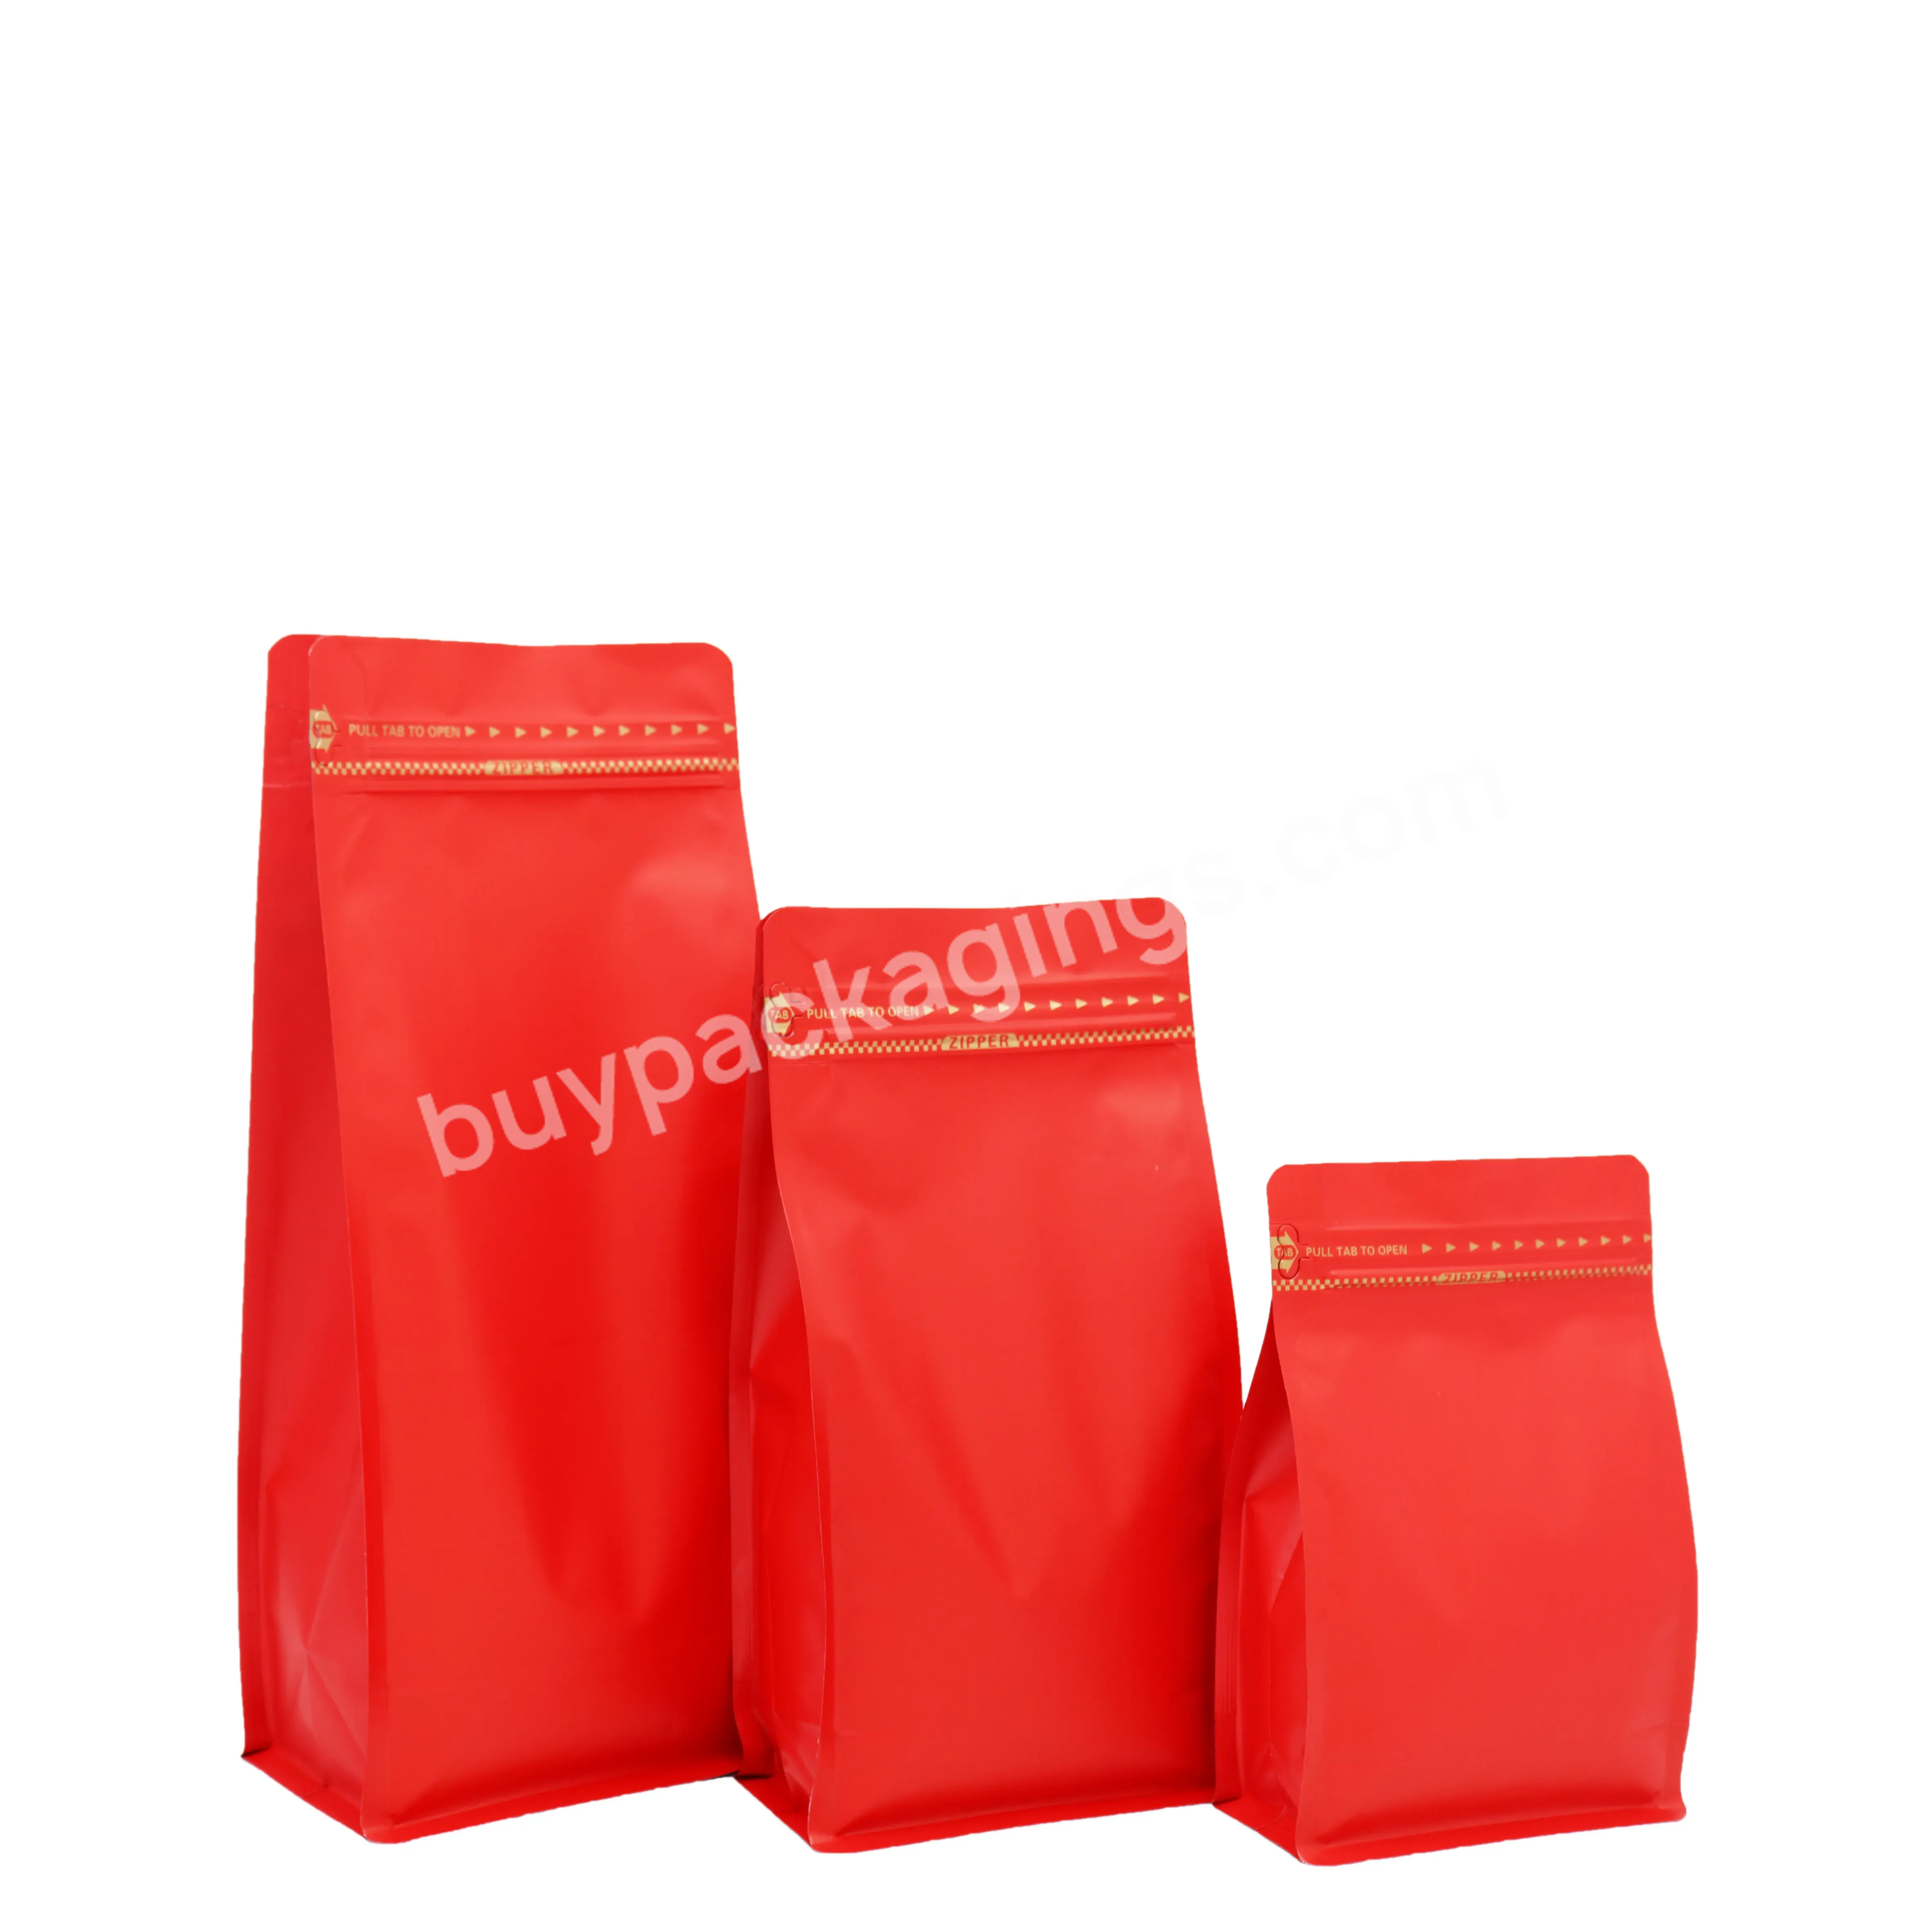 250g Stock Matt Red Square Bottom Box Flat Bottom Coffee Bag With Degassing Valve &tab Zipper - Buy 250 Red Coffee Bag,250g Flat Bottom Bag,250g Coffee Bag With Valve.